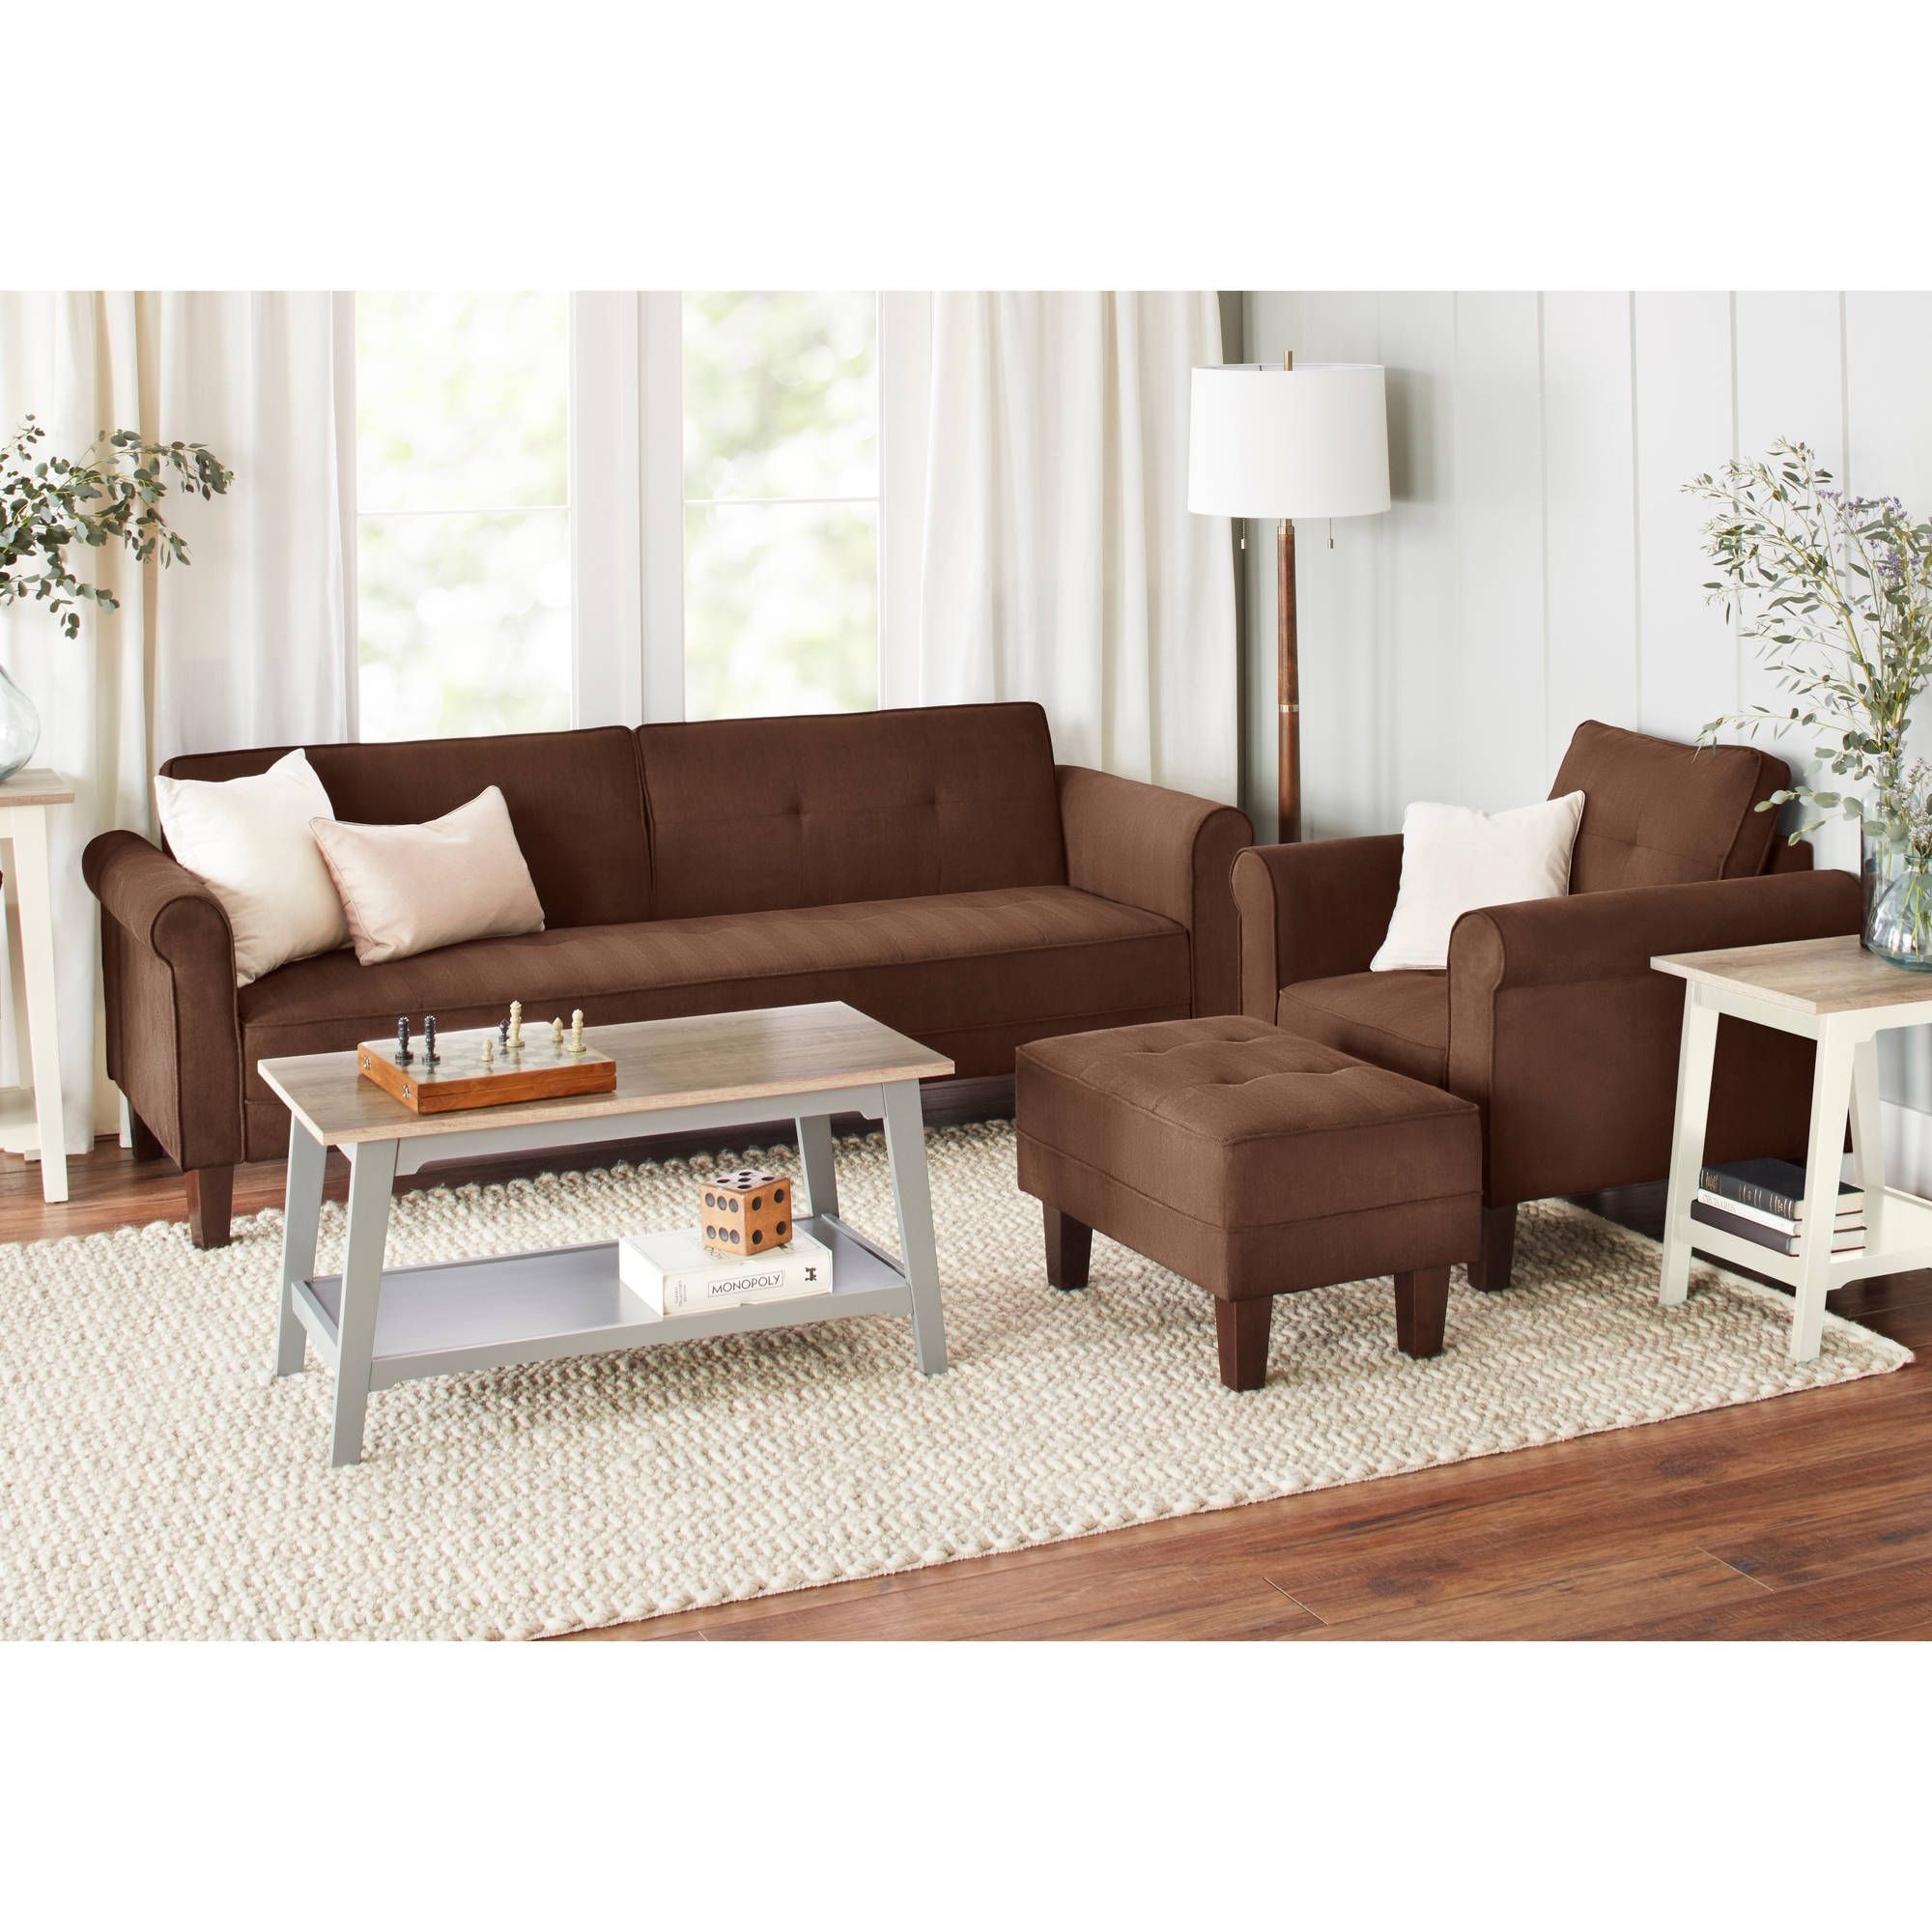 Furniture : Living Room Sofa Set Designs 2015 Living Room Sets With Regard To Kansas City Mo Sectional Sofas (View 2 of 10)